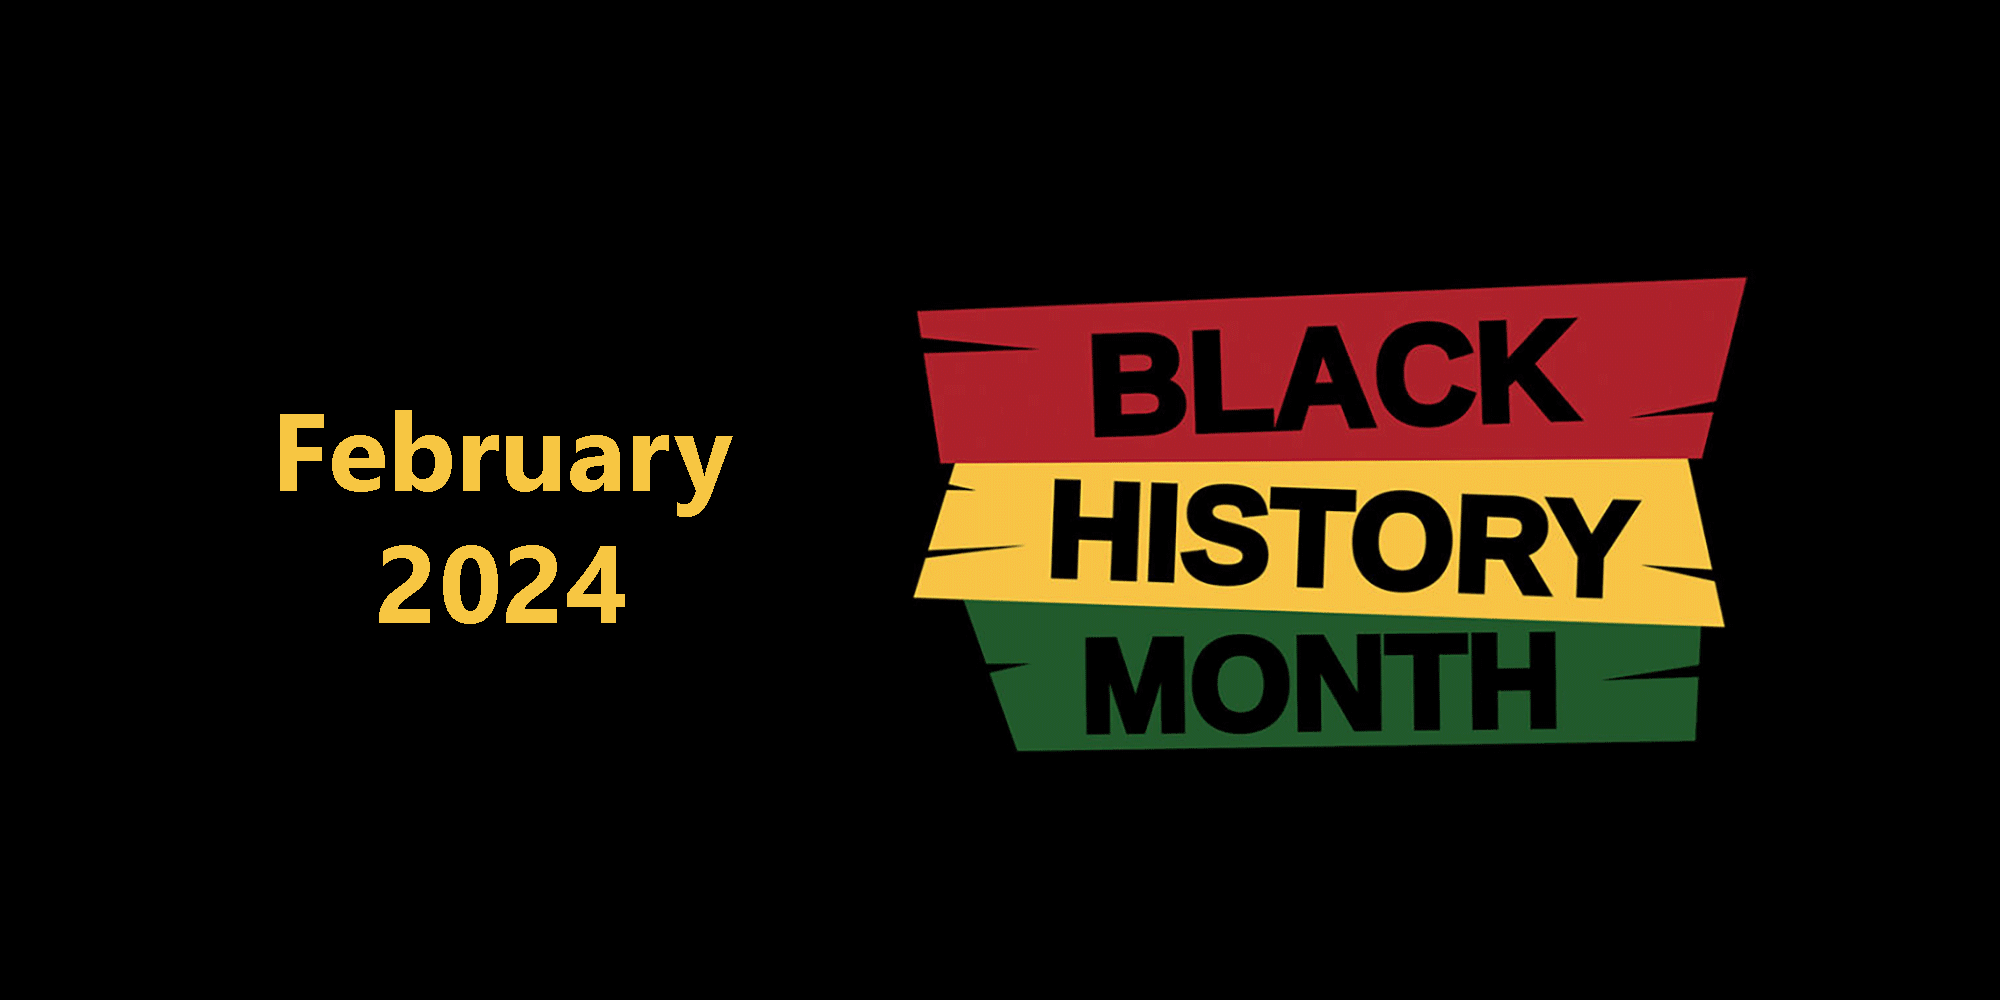 Black History Month. February 2024.